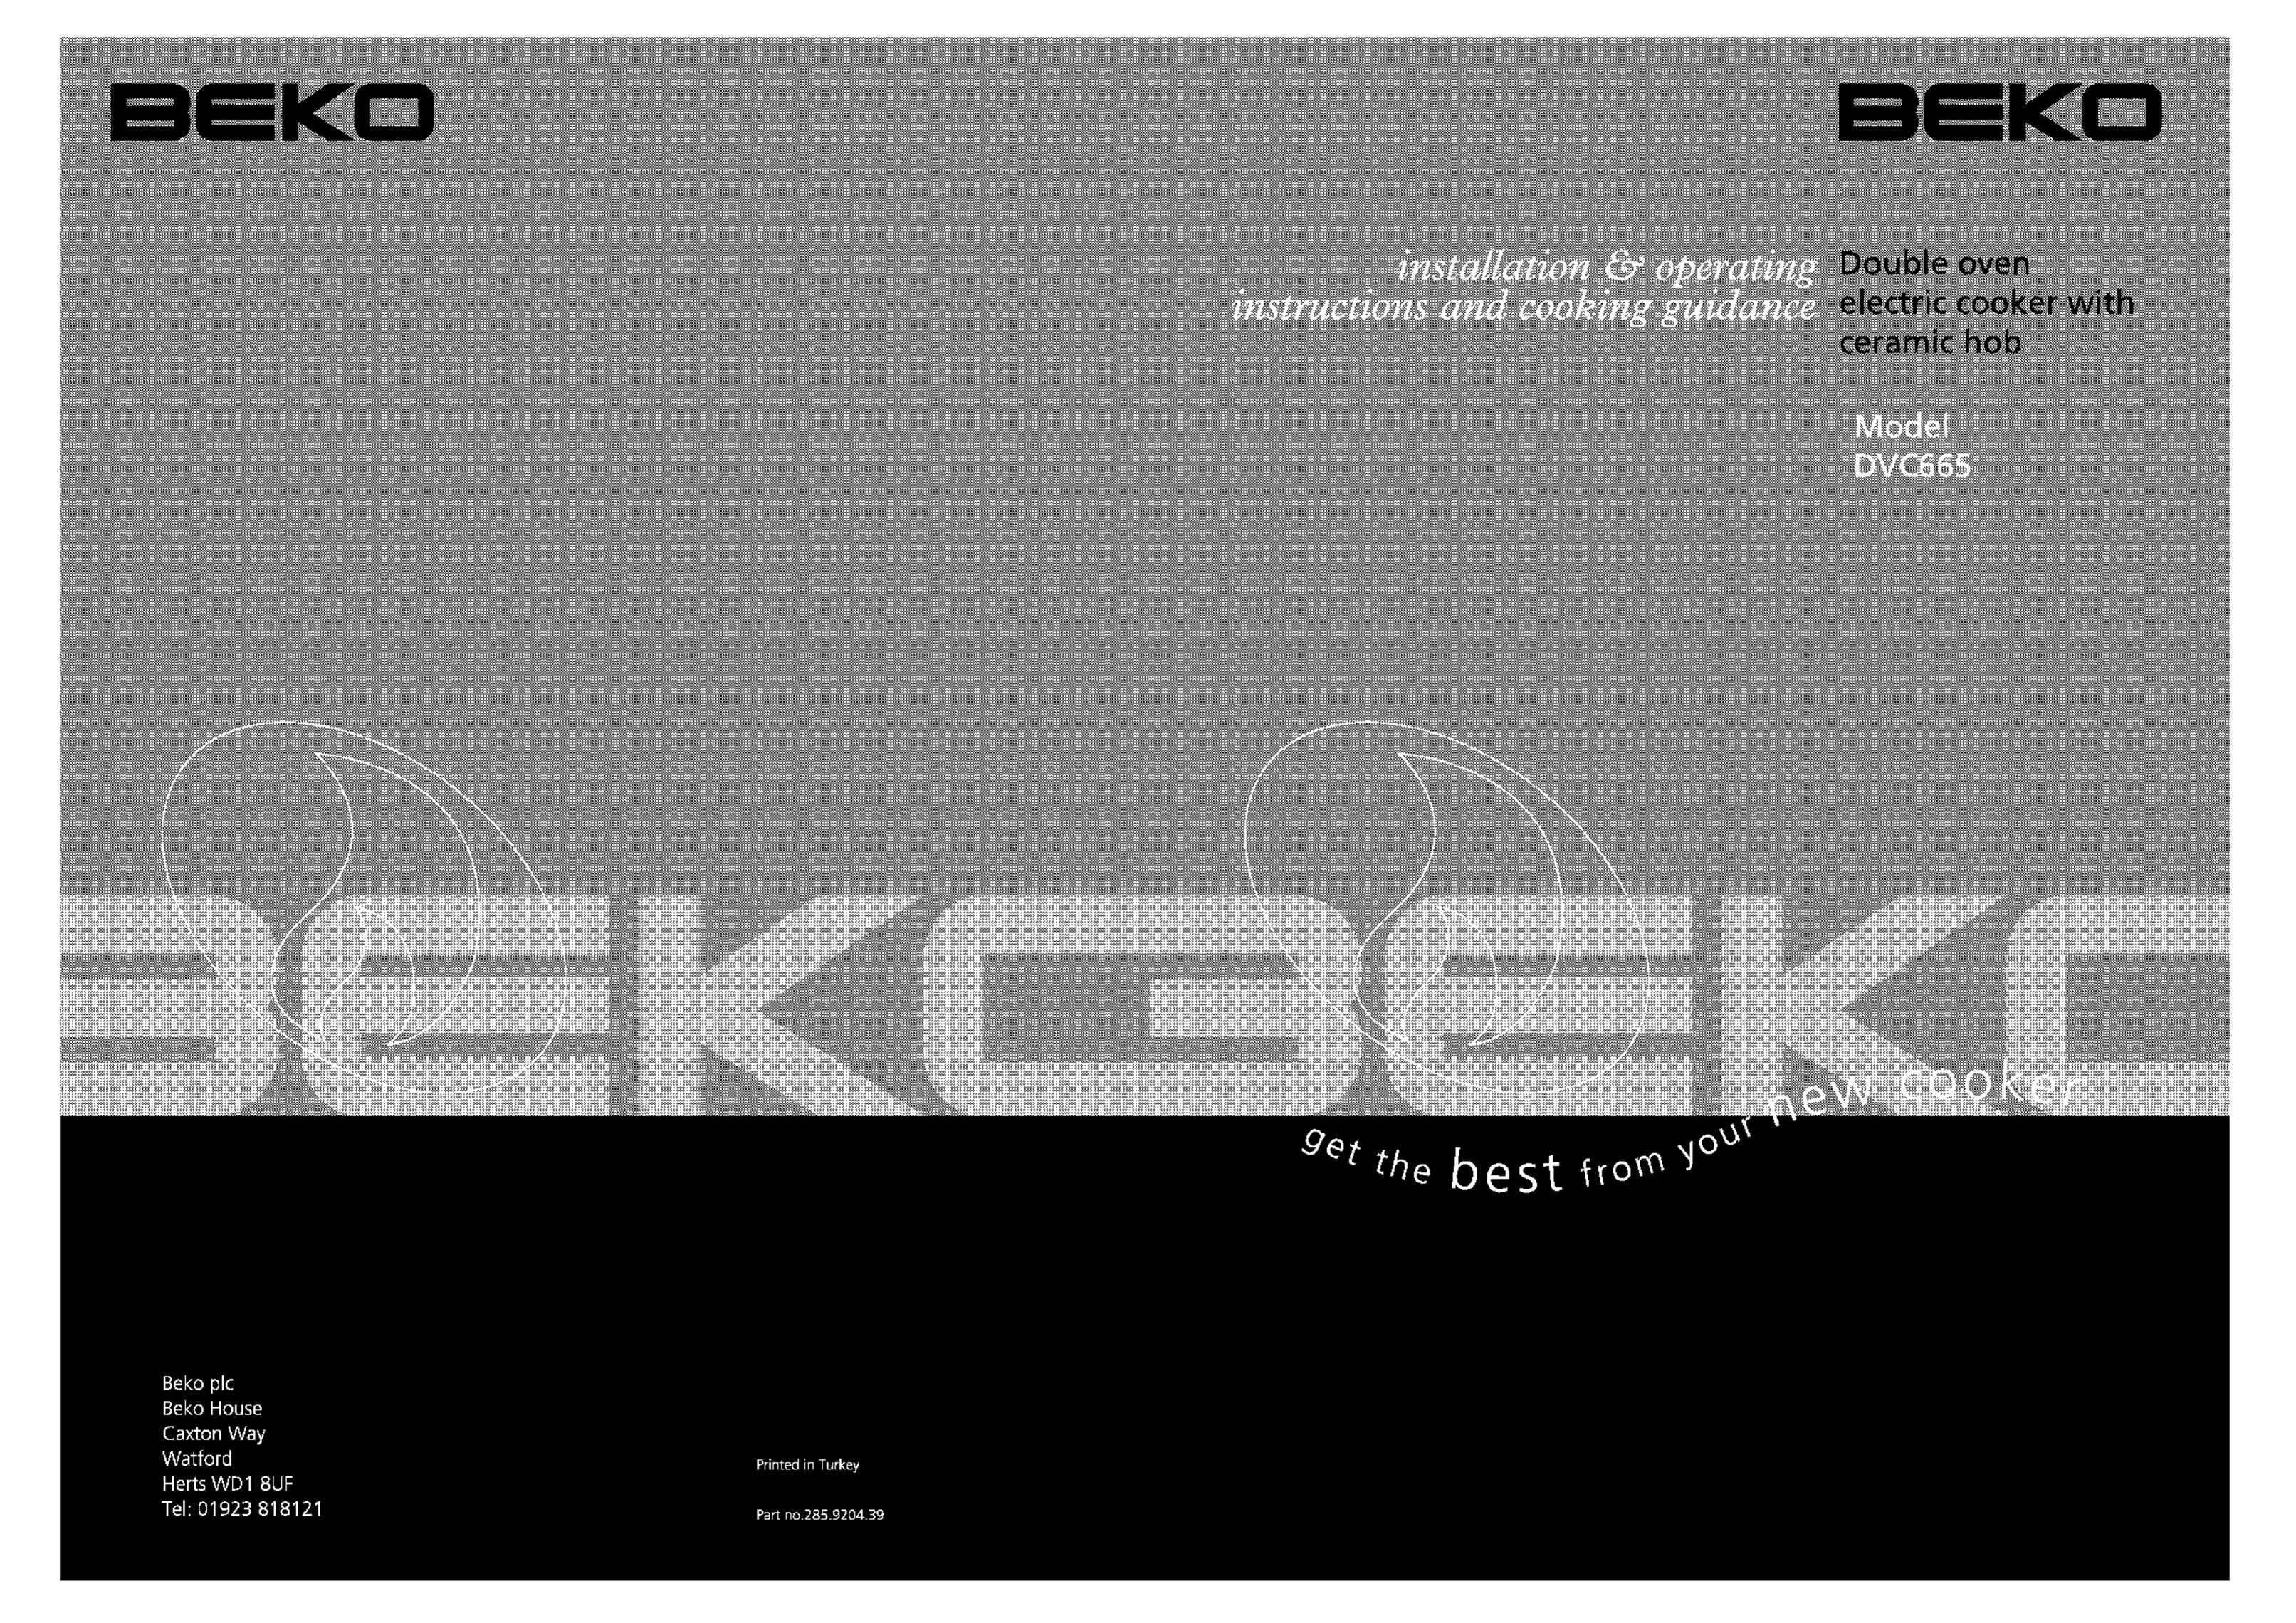 Beko DVC665 Double Oven User Manual